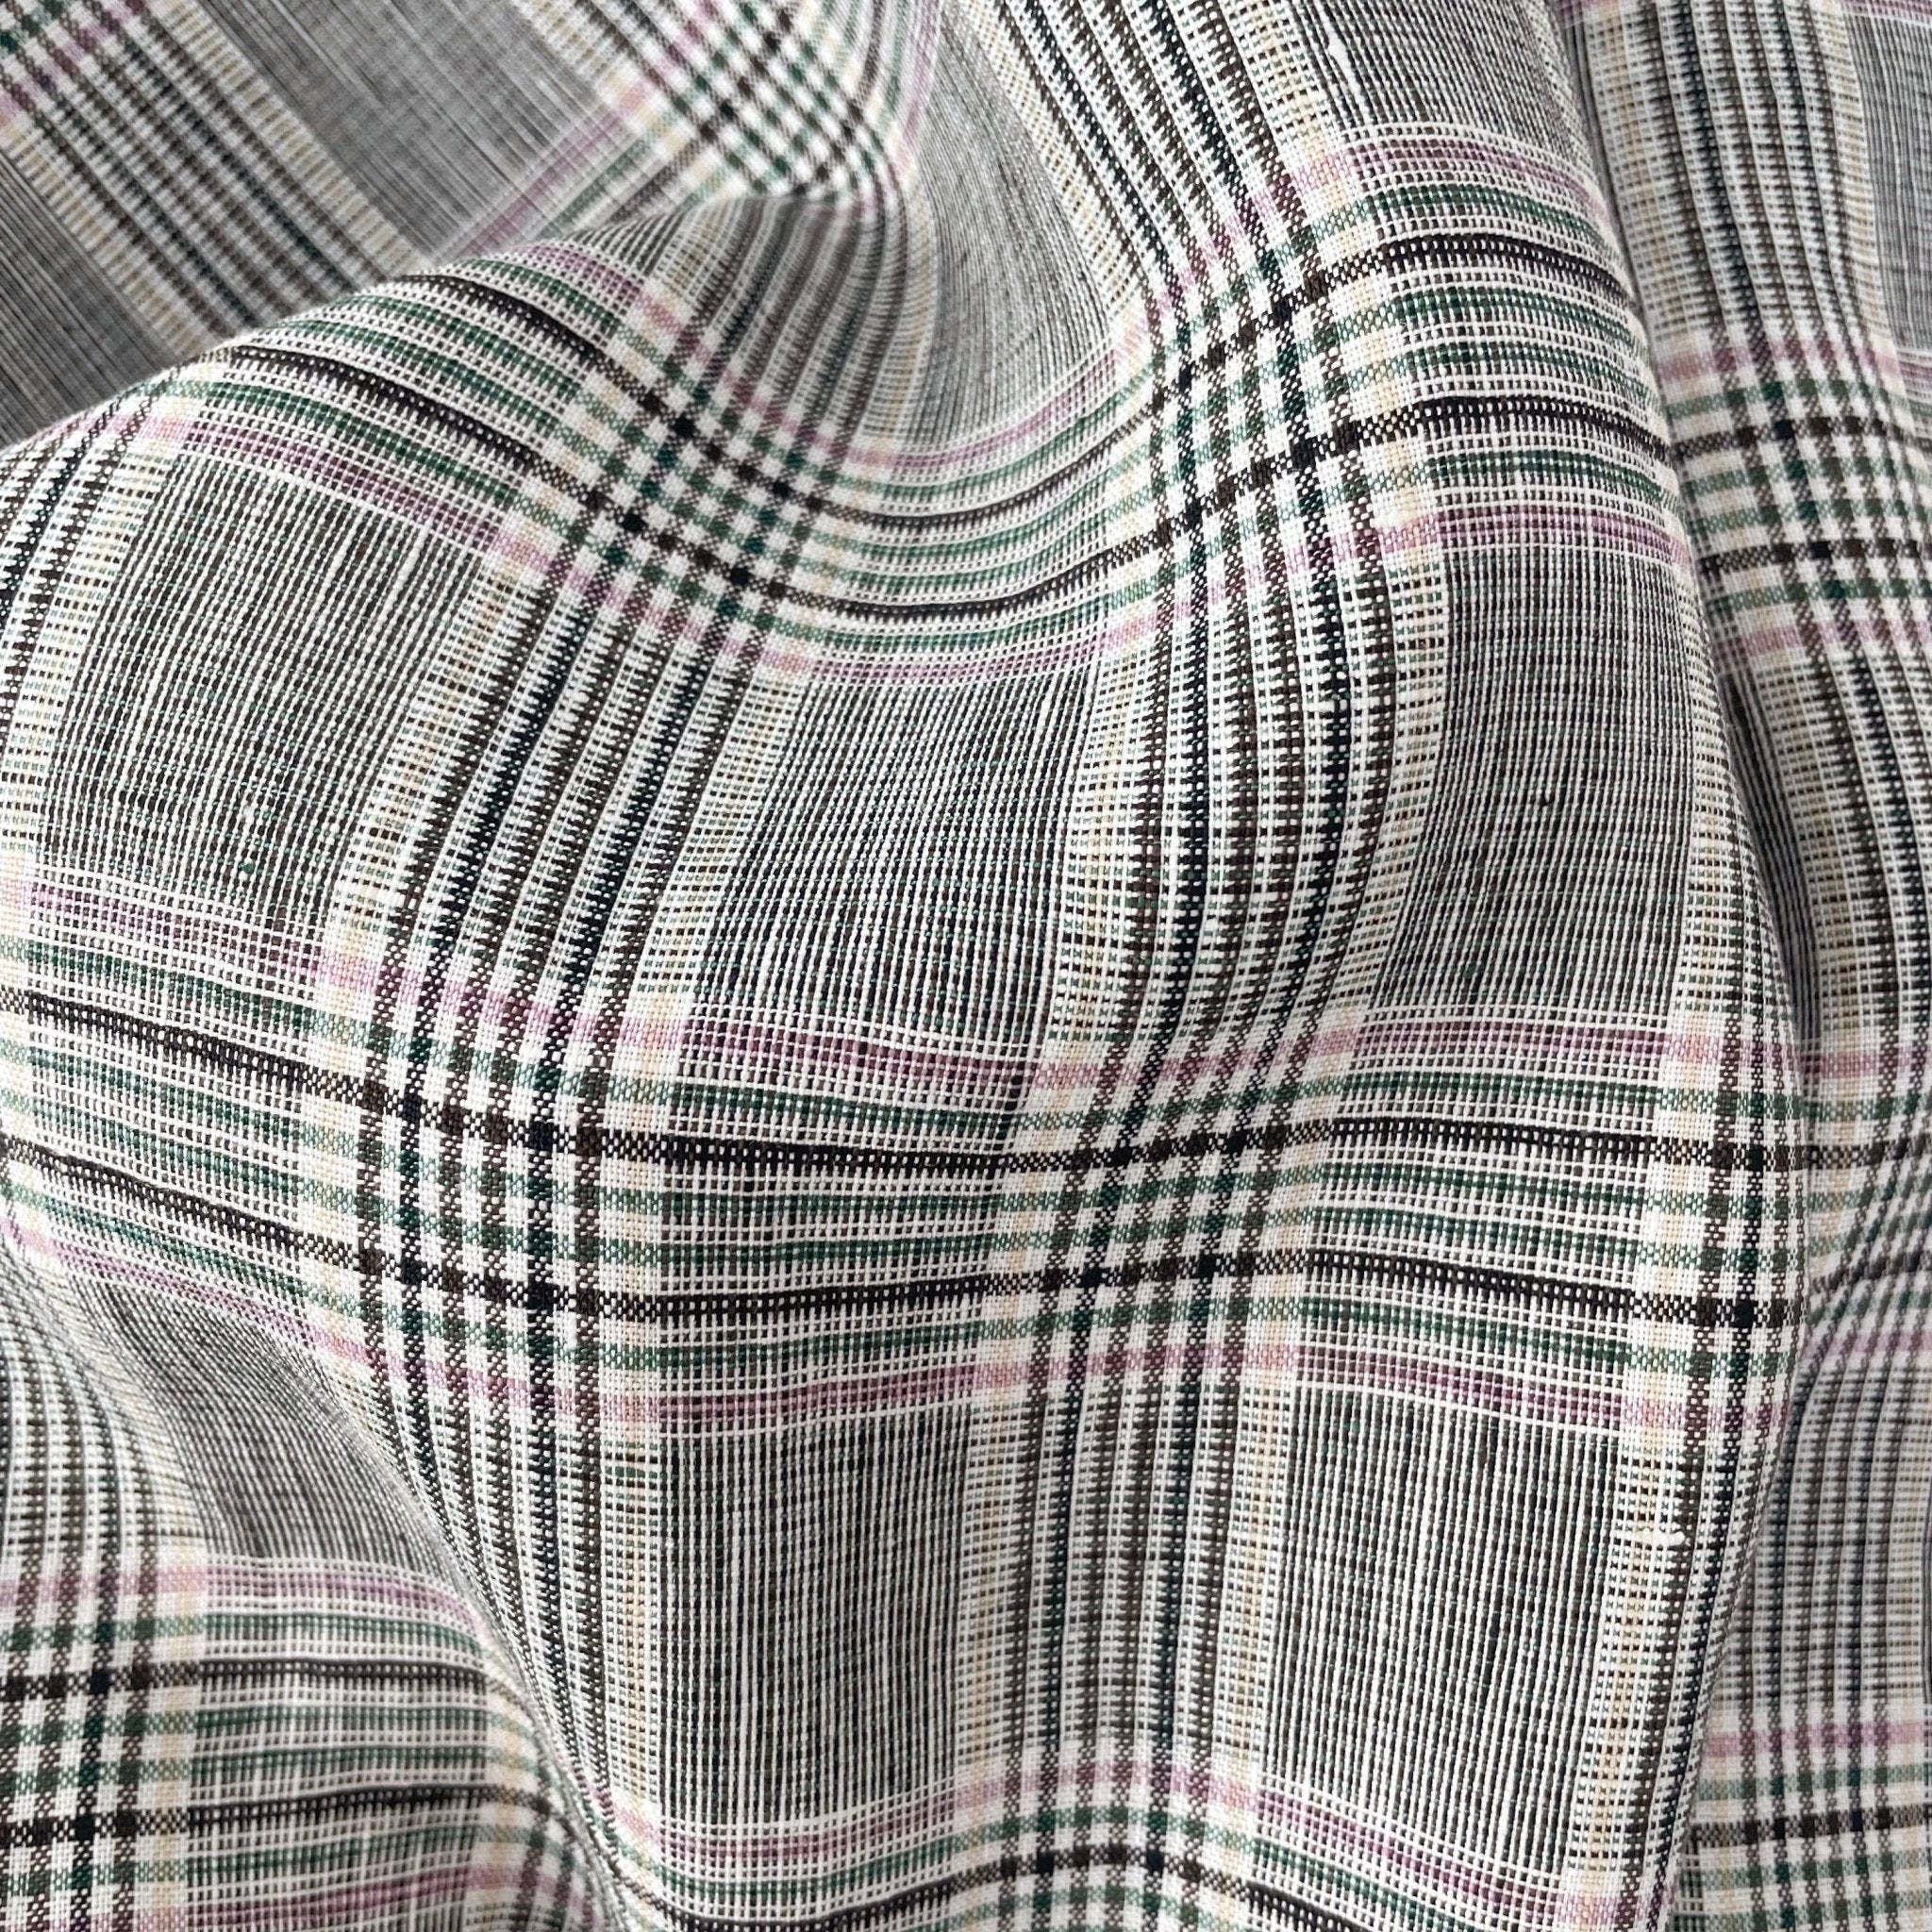 Linen Big Check Fabric 7142 7143 - The Linen Lab - Black